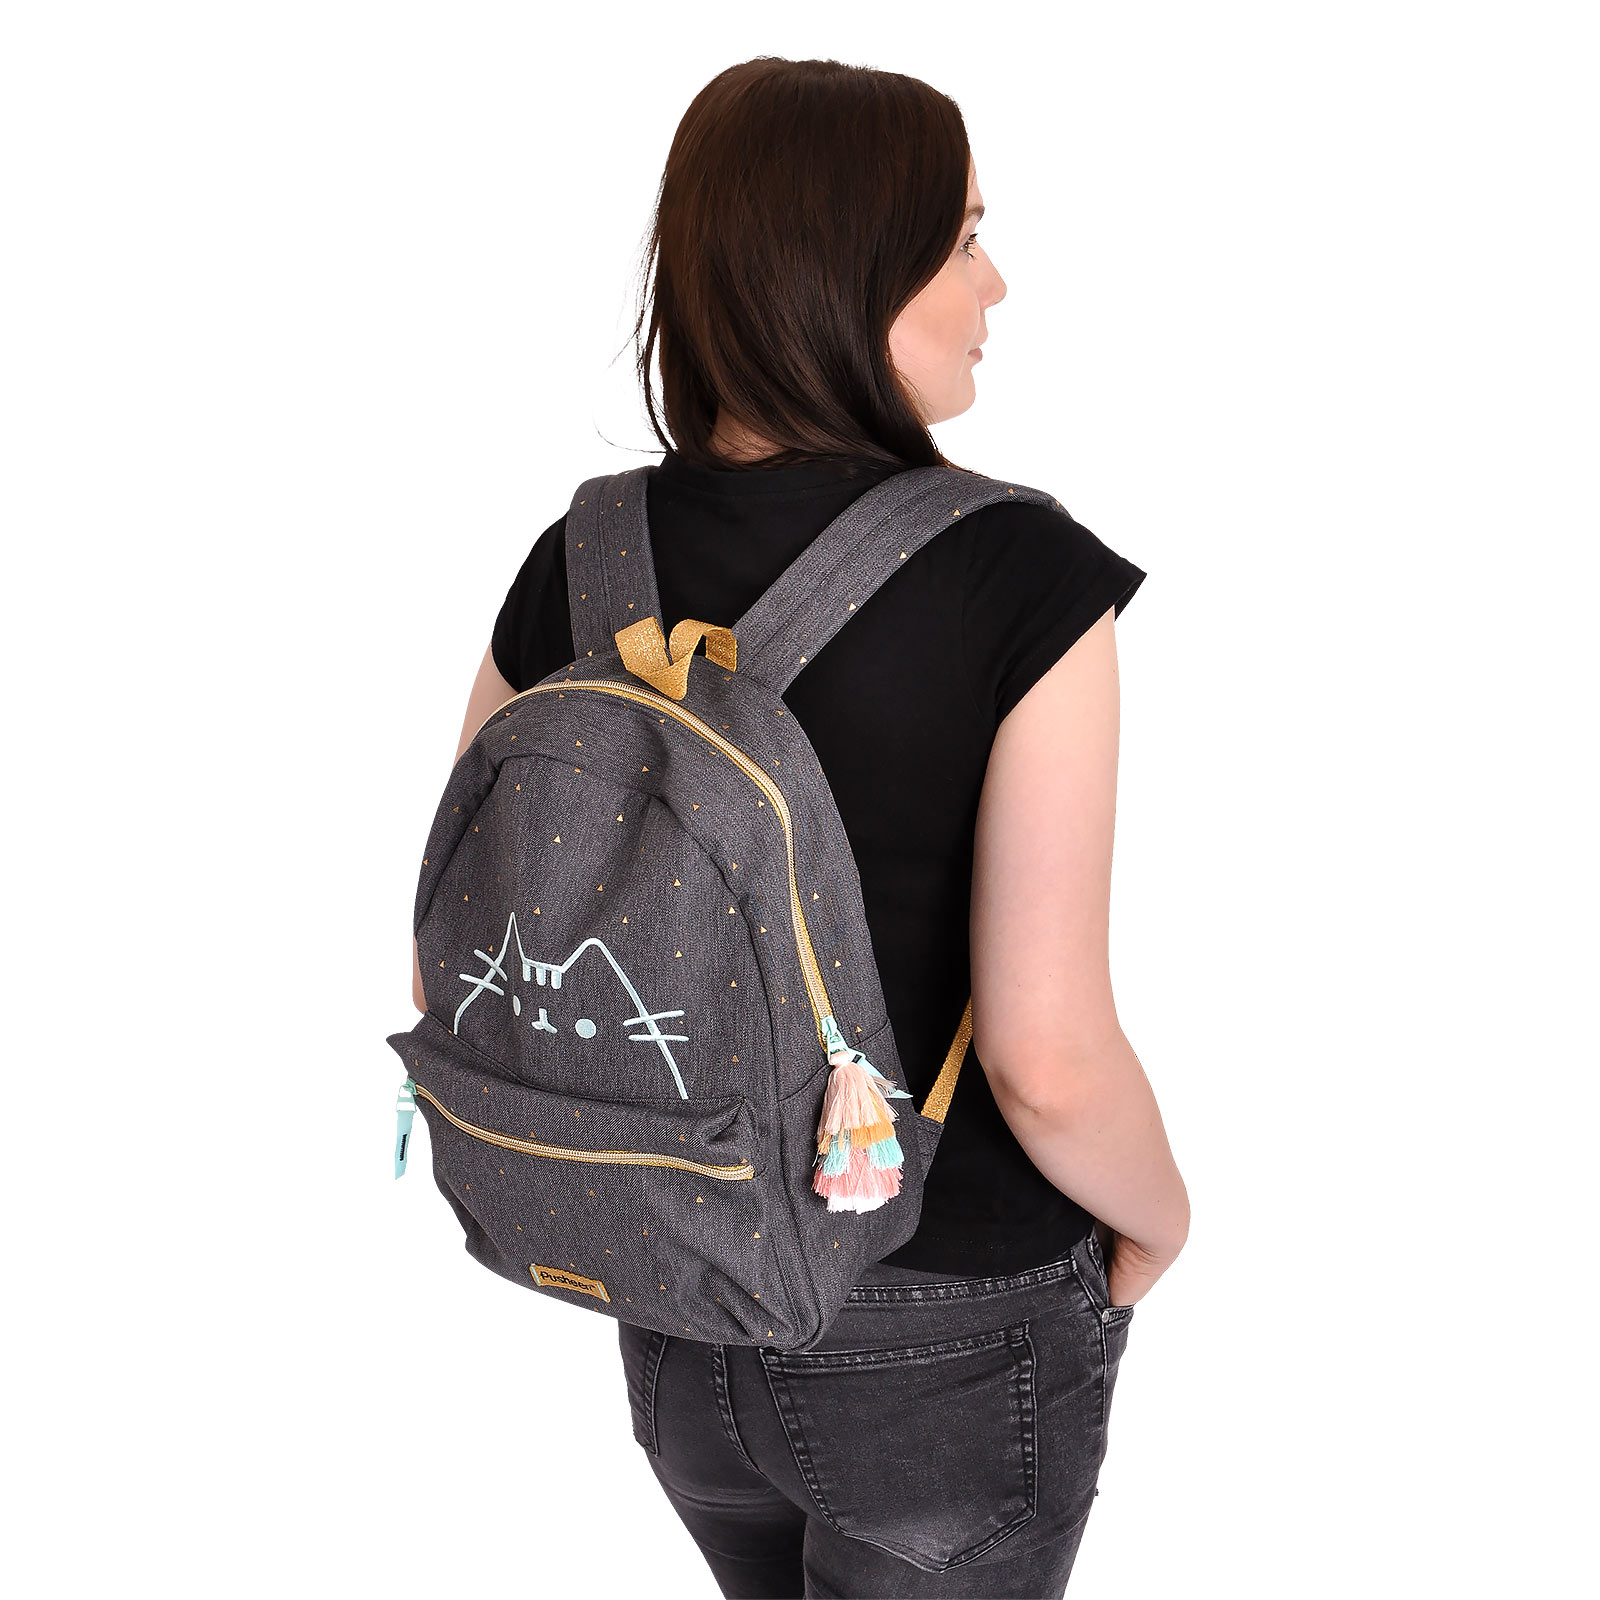 Pusheen - Purrfect Backpack